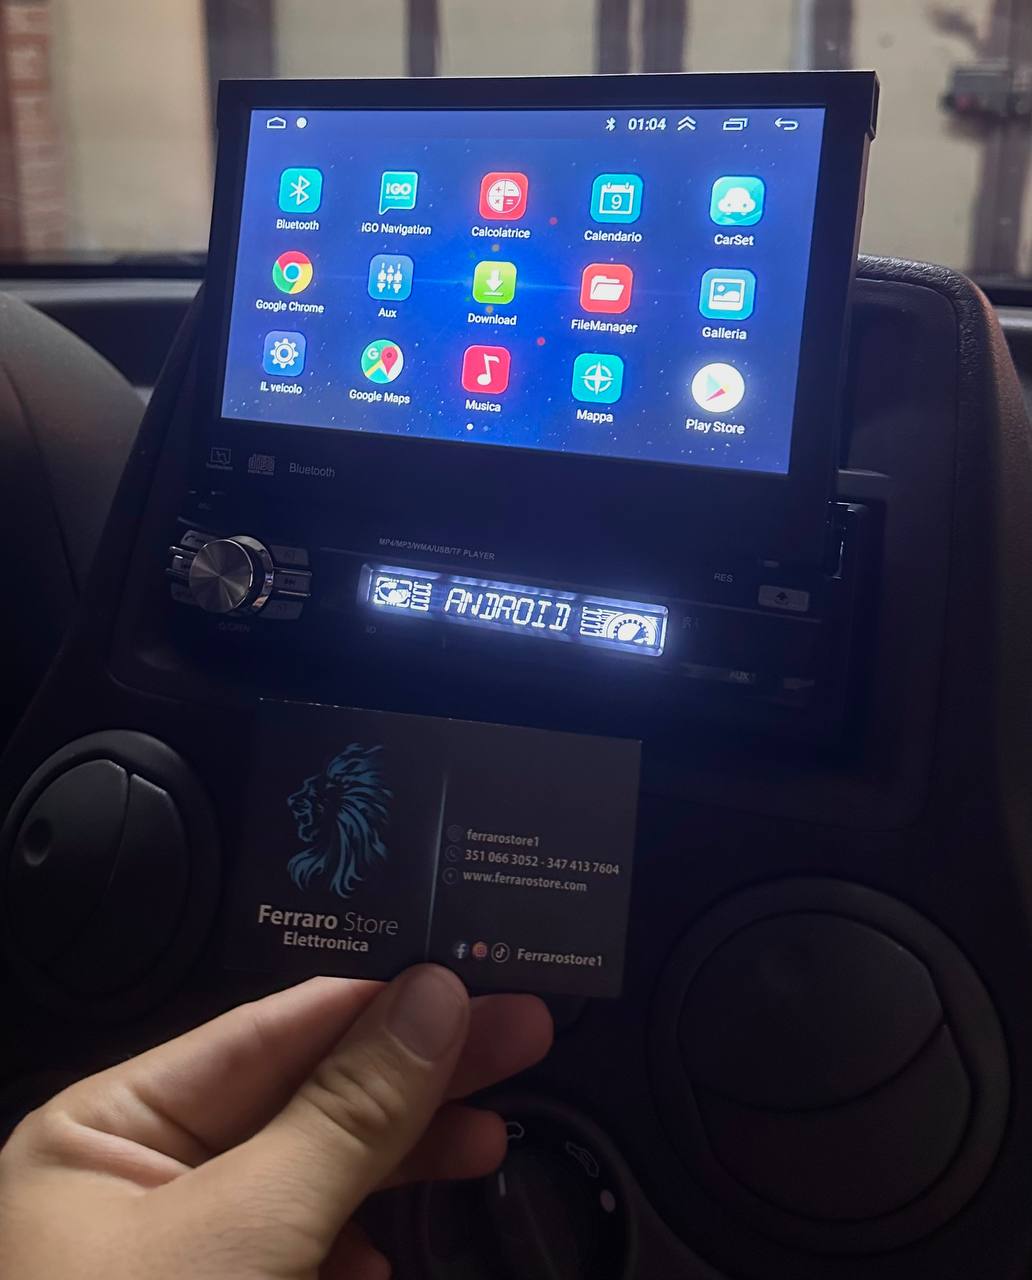 Autoradio per FIAT Panda 2a - 1Din 7Pollici, Android, Motorizzato, GPS,  WiFi, Radio, Bluetooth, FM, SWC, PlayStore